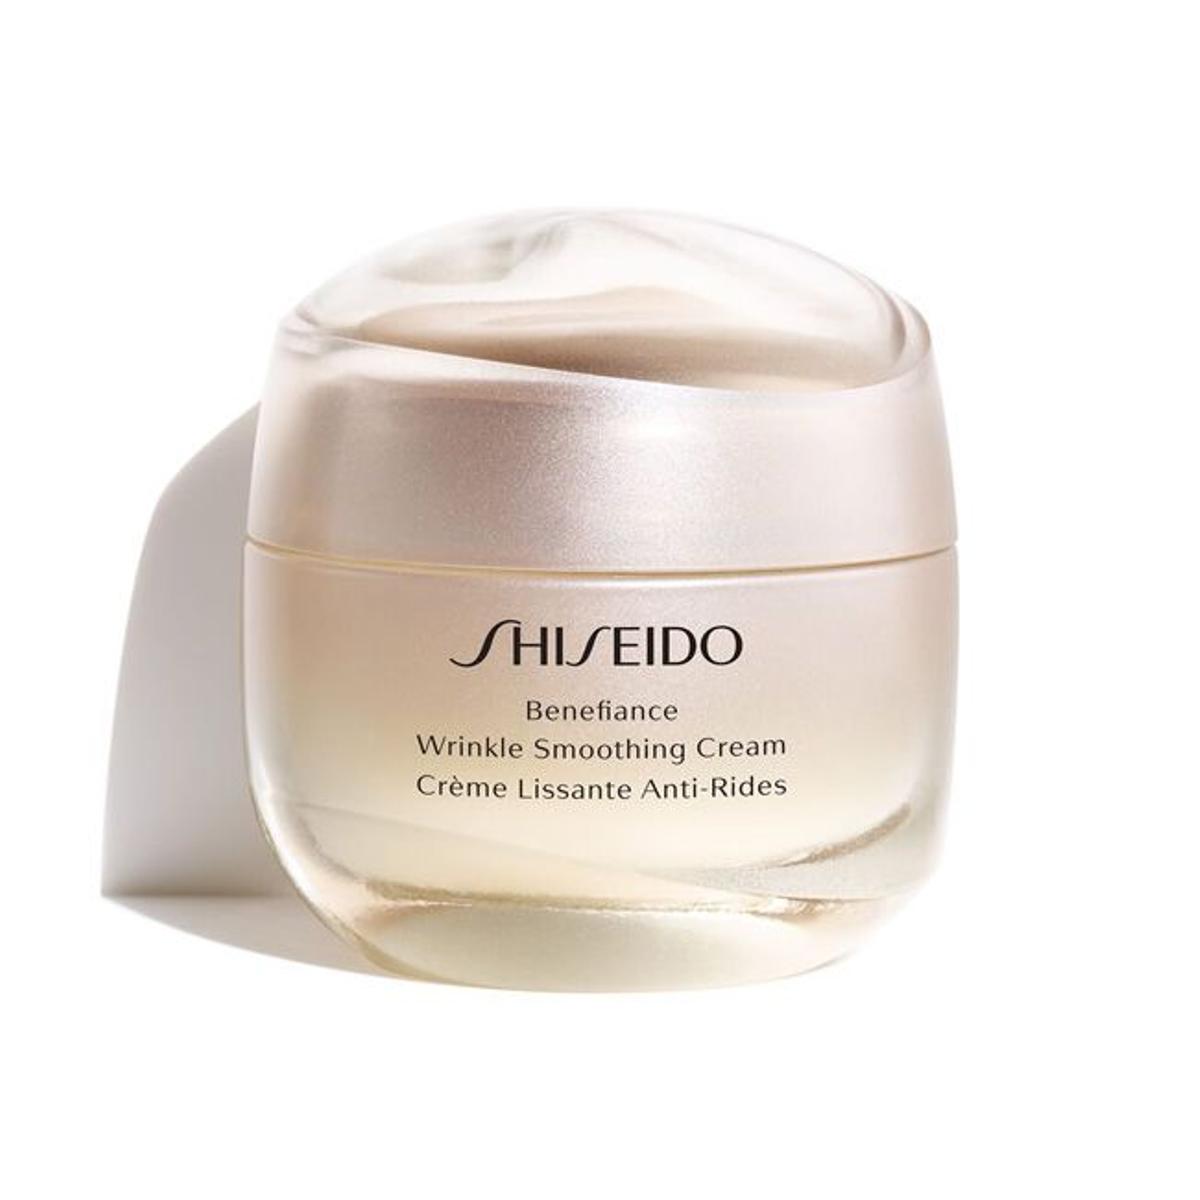 Crema antiarrugas 'Wrinkle Smoothing Cream', de Shiseido